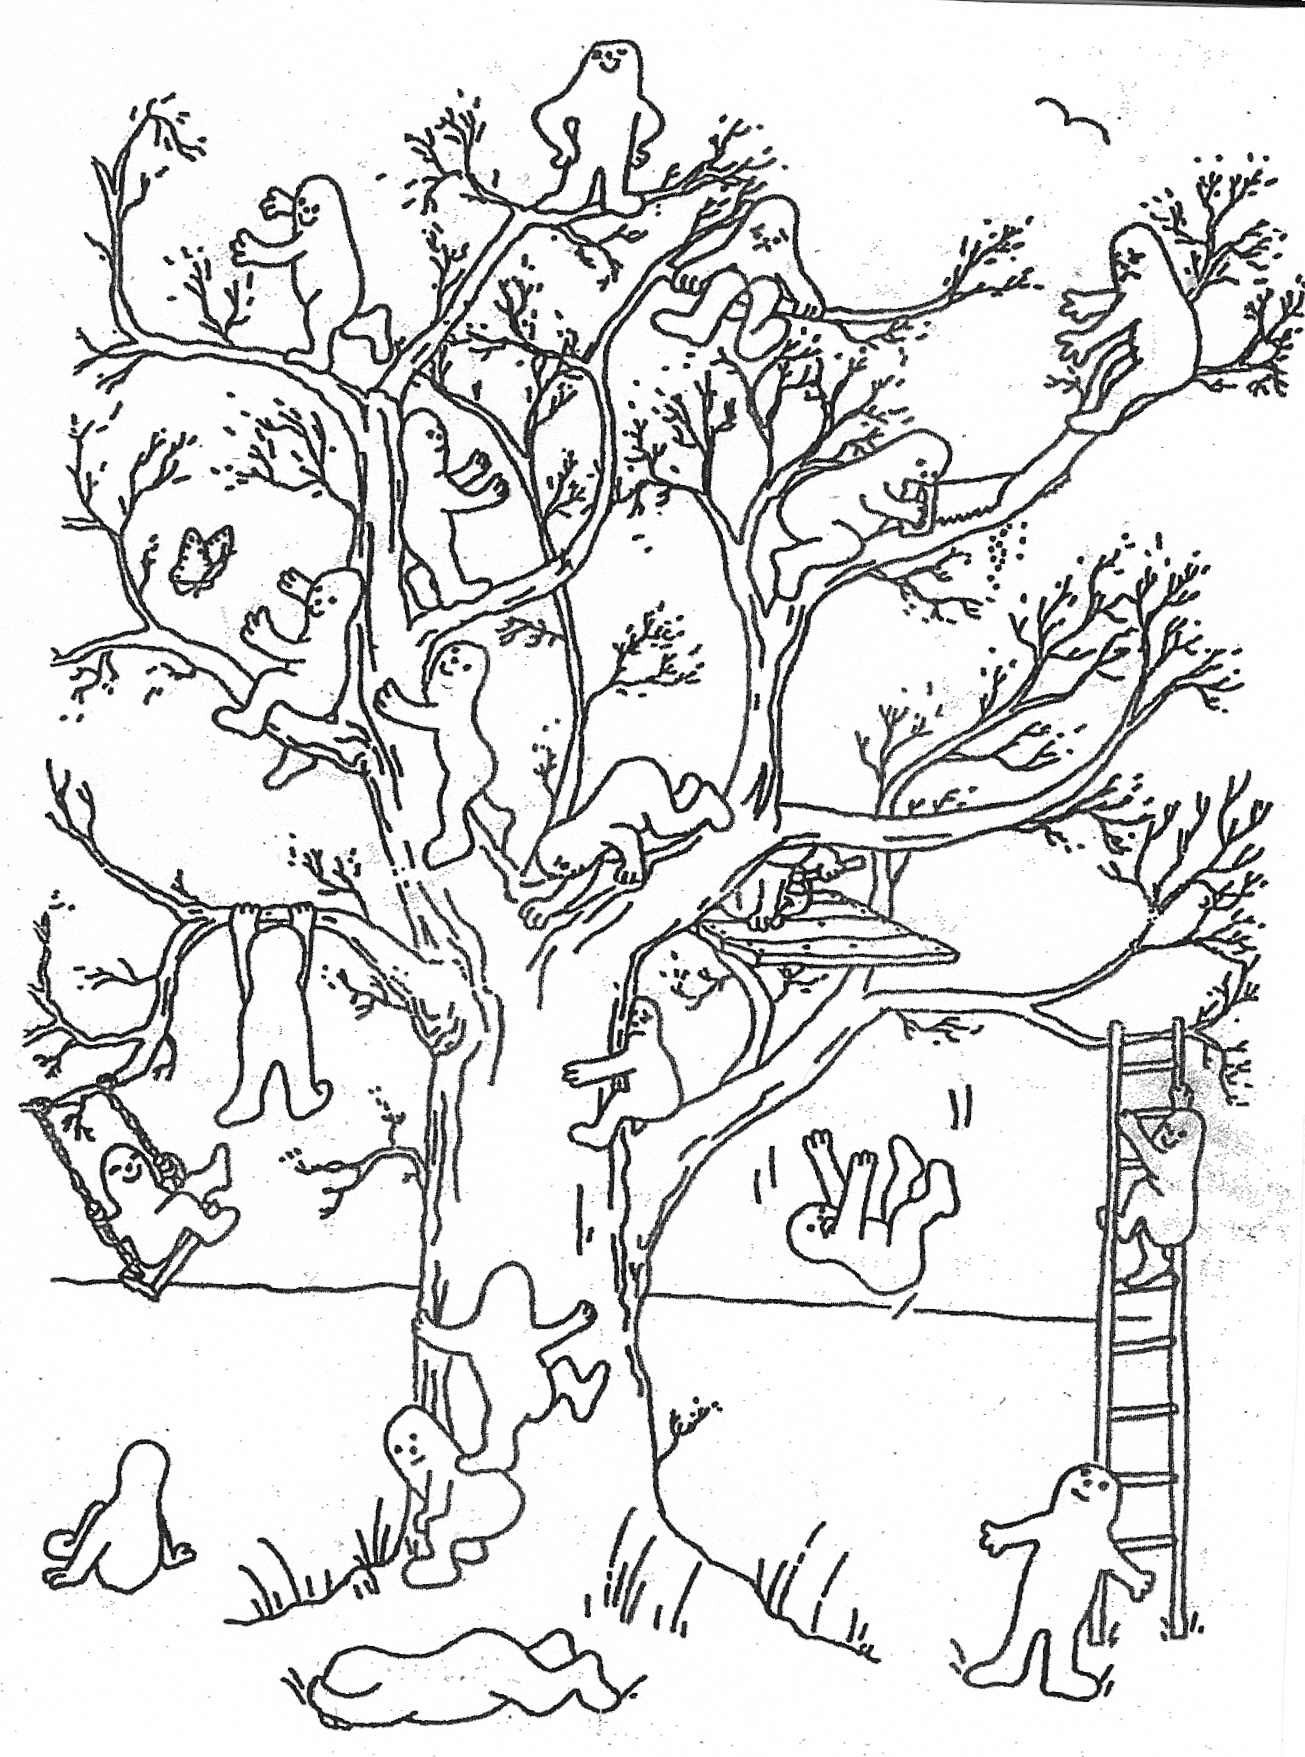 Методика самооценки «дерево» (Дж. И Д. Лампен, модиф. Л.П. Пономаренко);